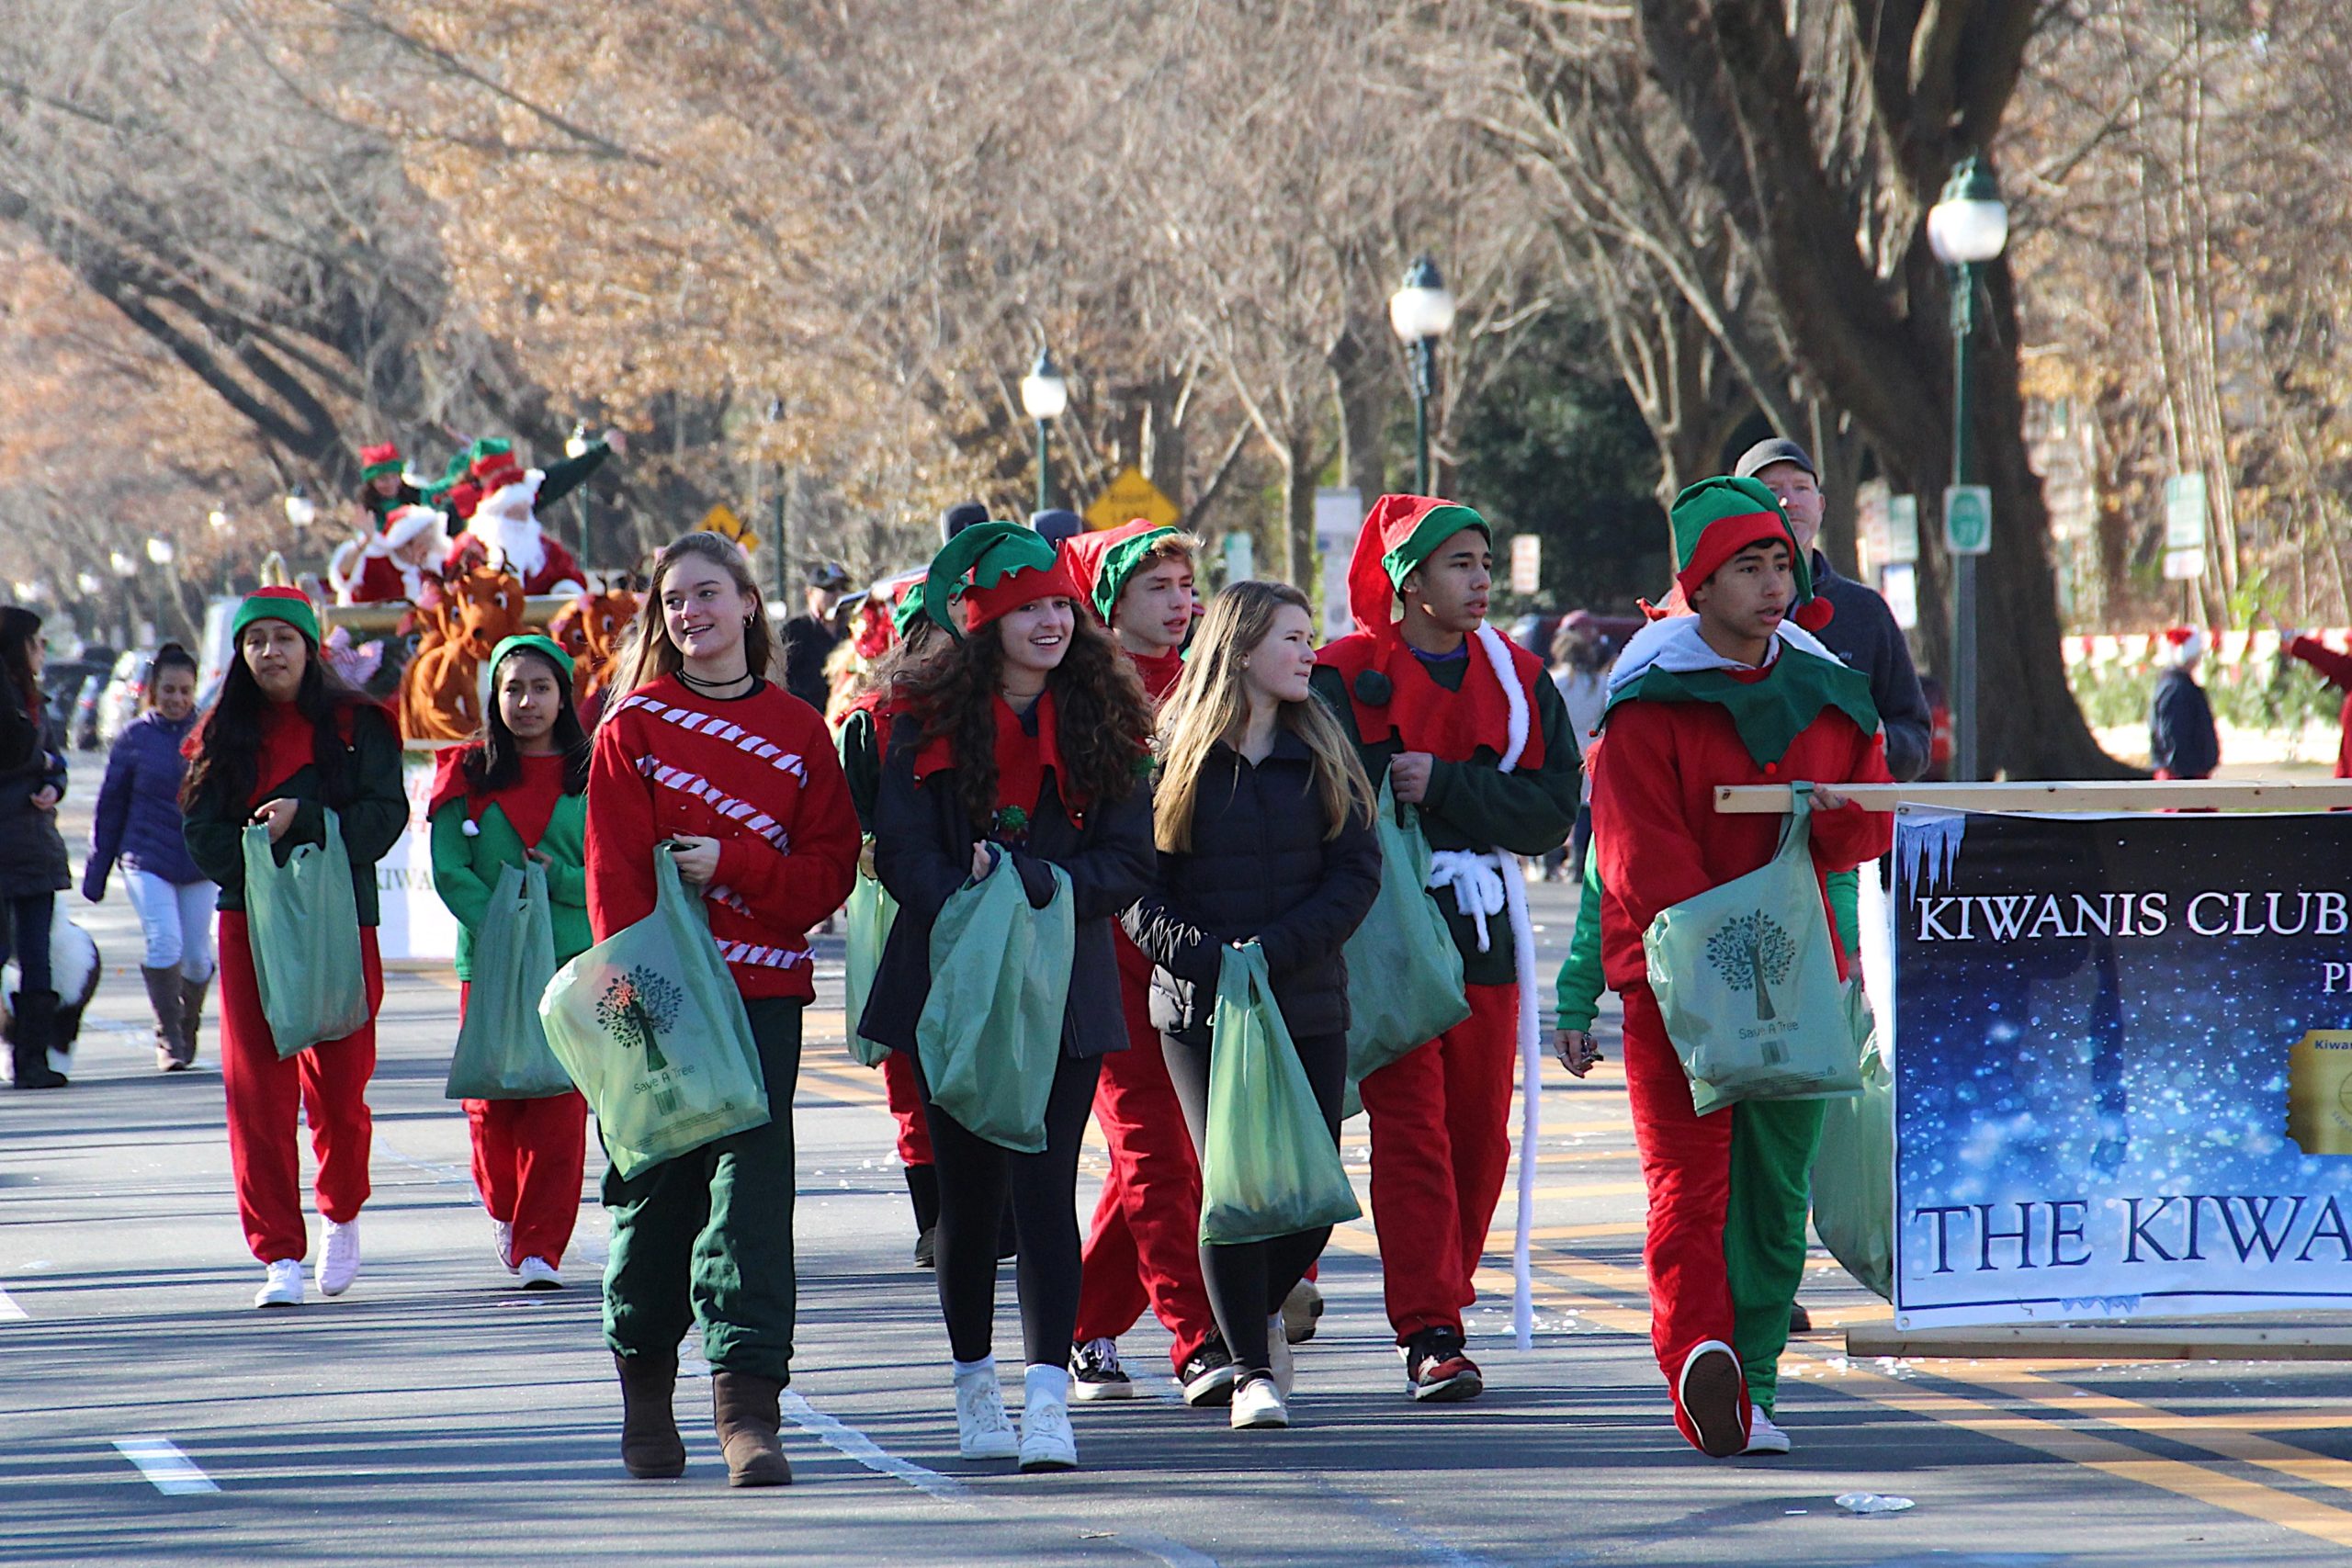 The Santa Parade in East Hampton on Saturday morning.